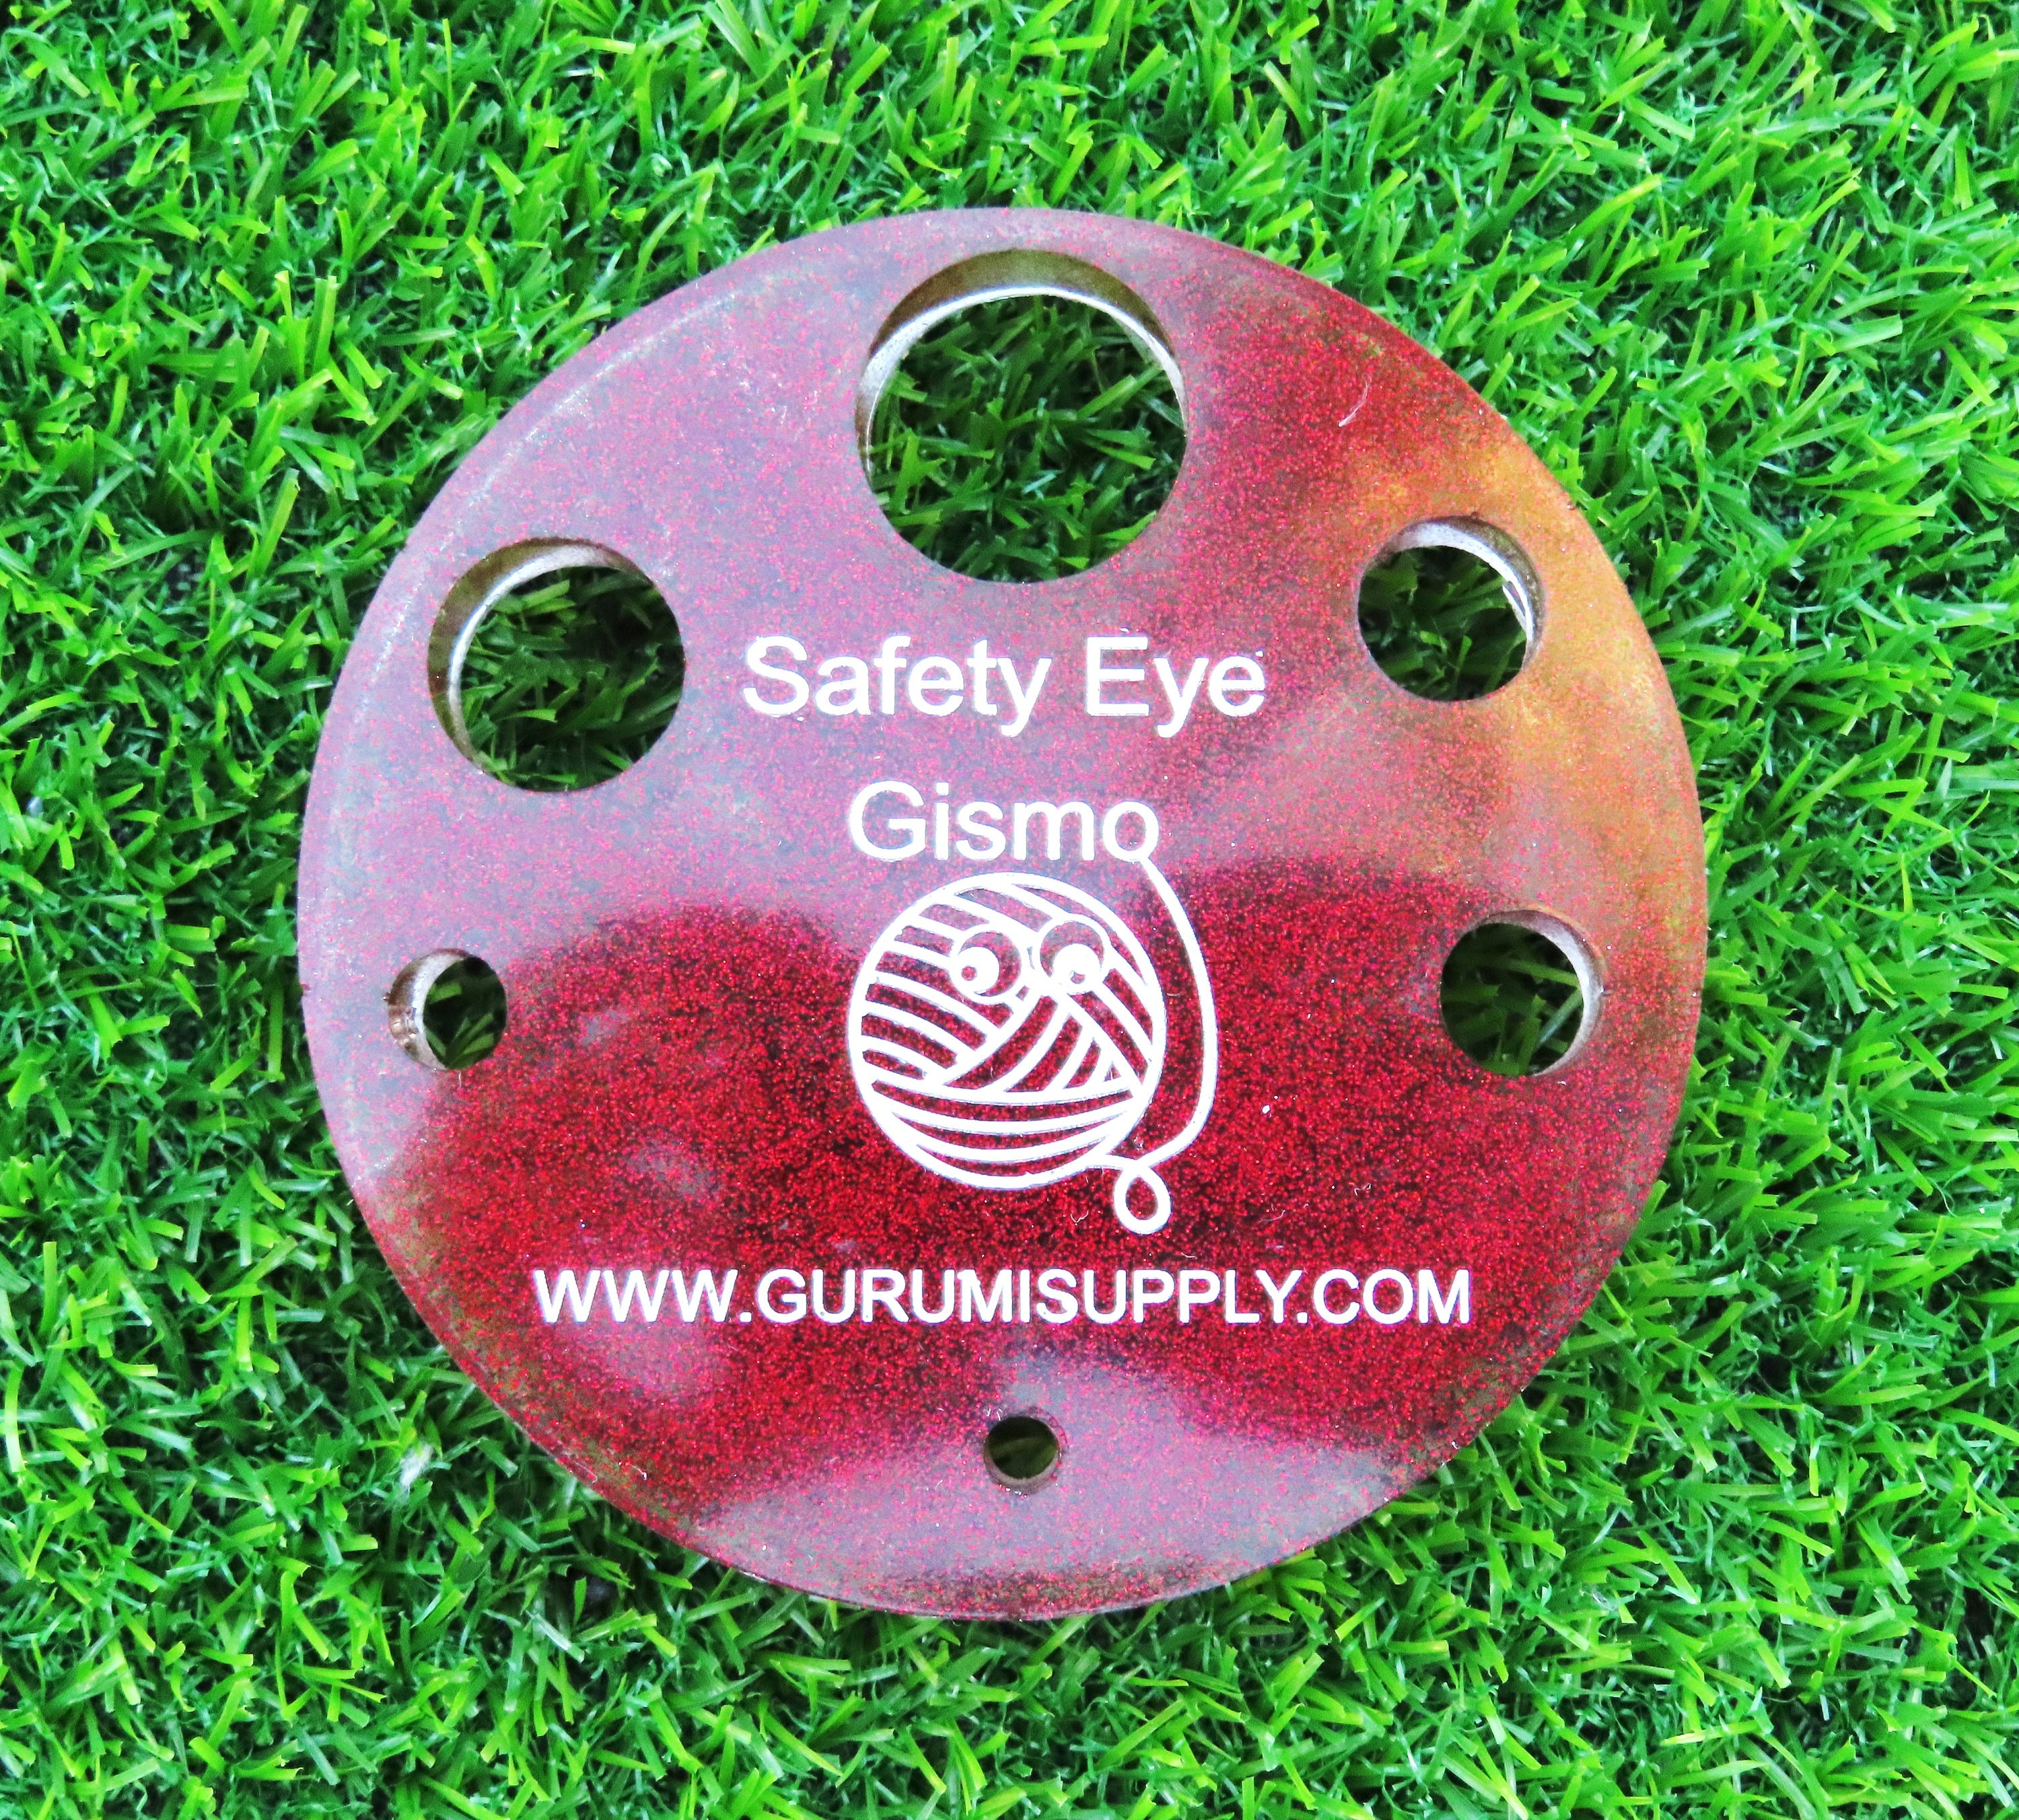 Safety Eye Gismo - Triangle Shape - Safety Eye Tool - Safety Eye Jig -  Safety Eye Helper - Wood - Trapezoid - Animal - Craft - Amigurumi